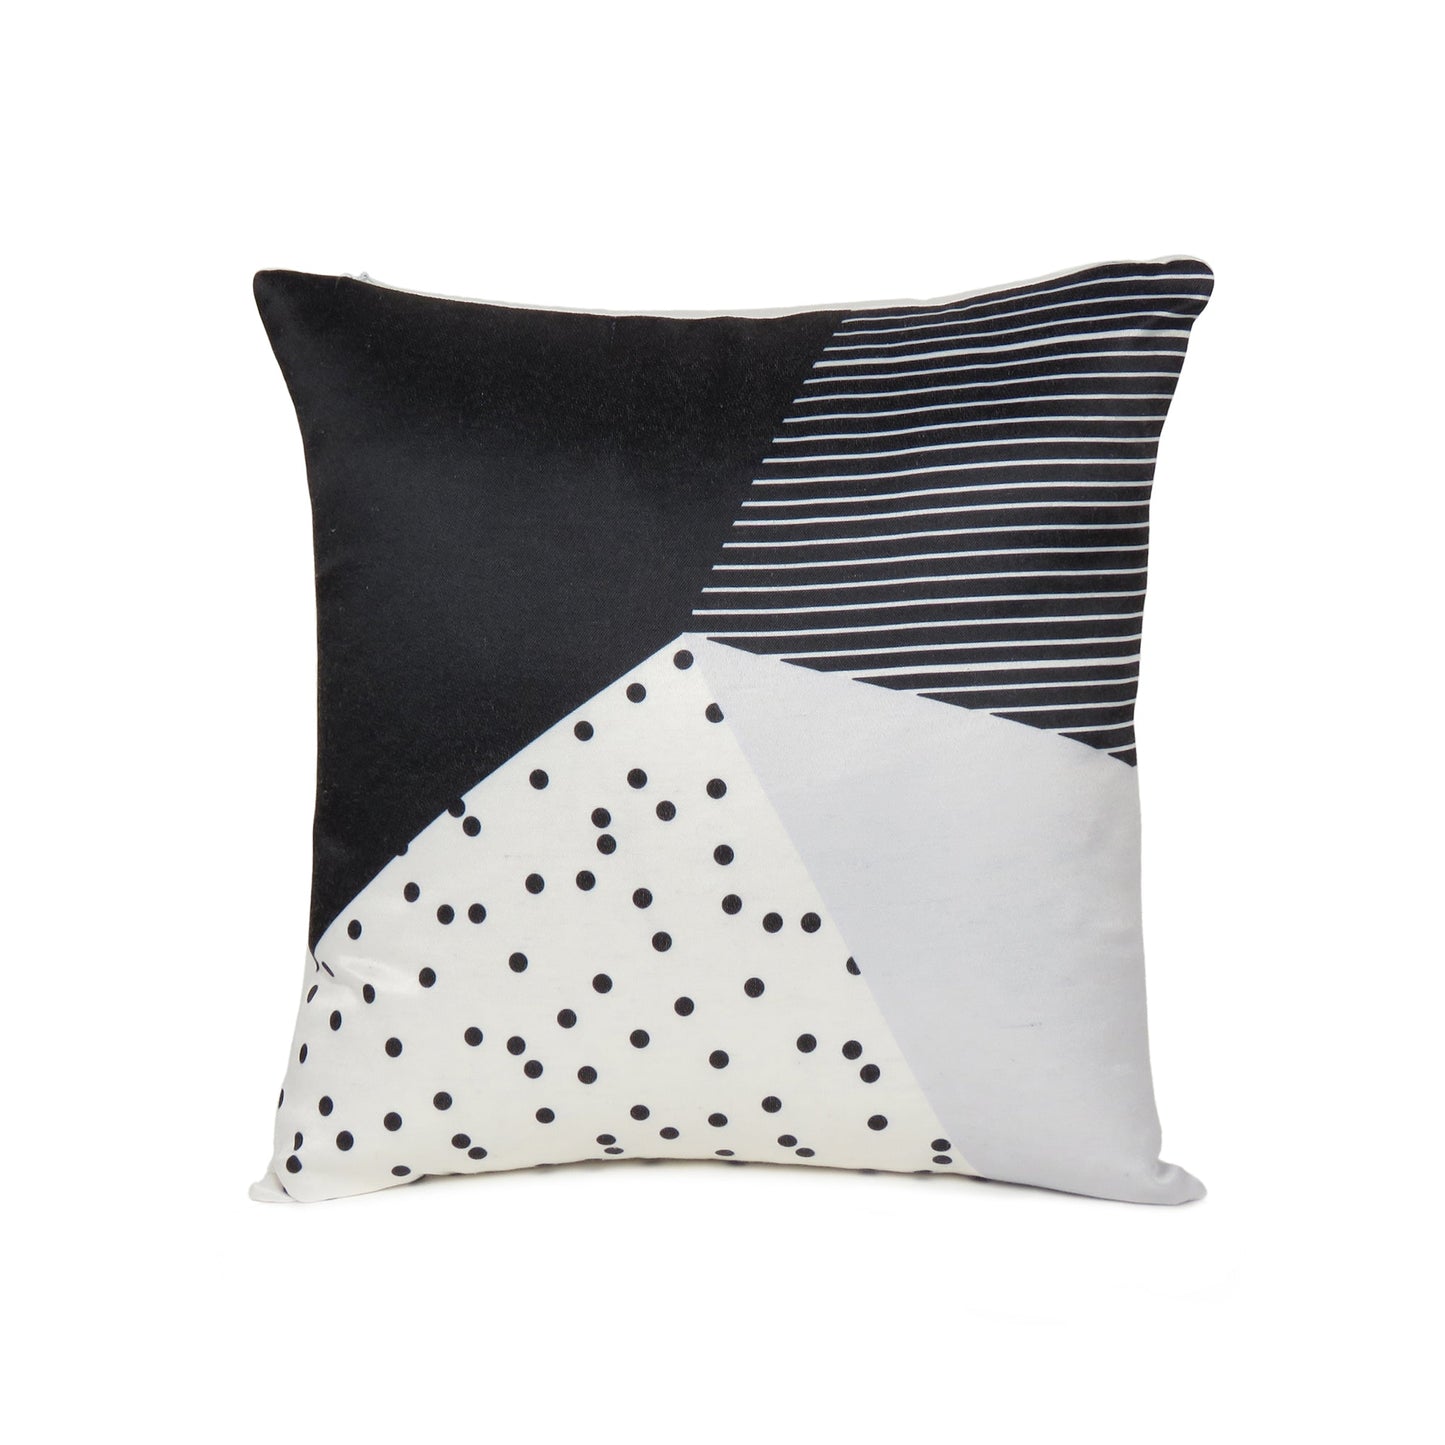 Black Polka dot Printed Cushion Cover in Set of 2